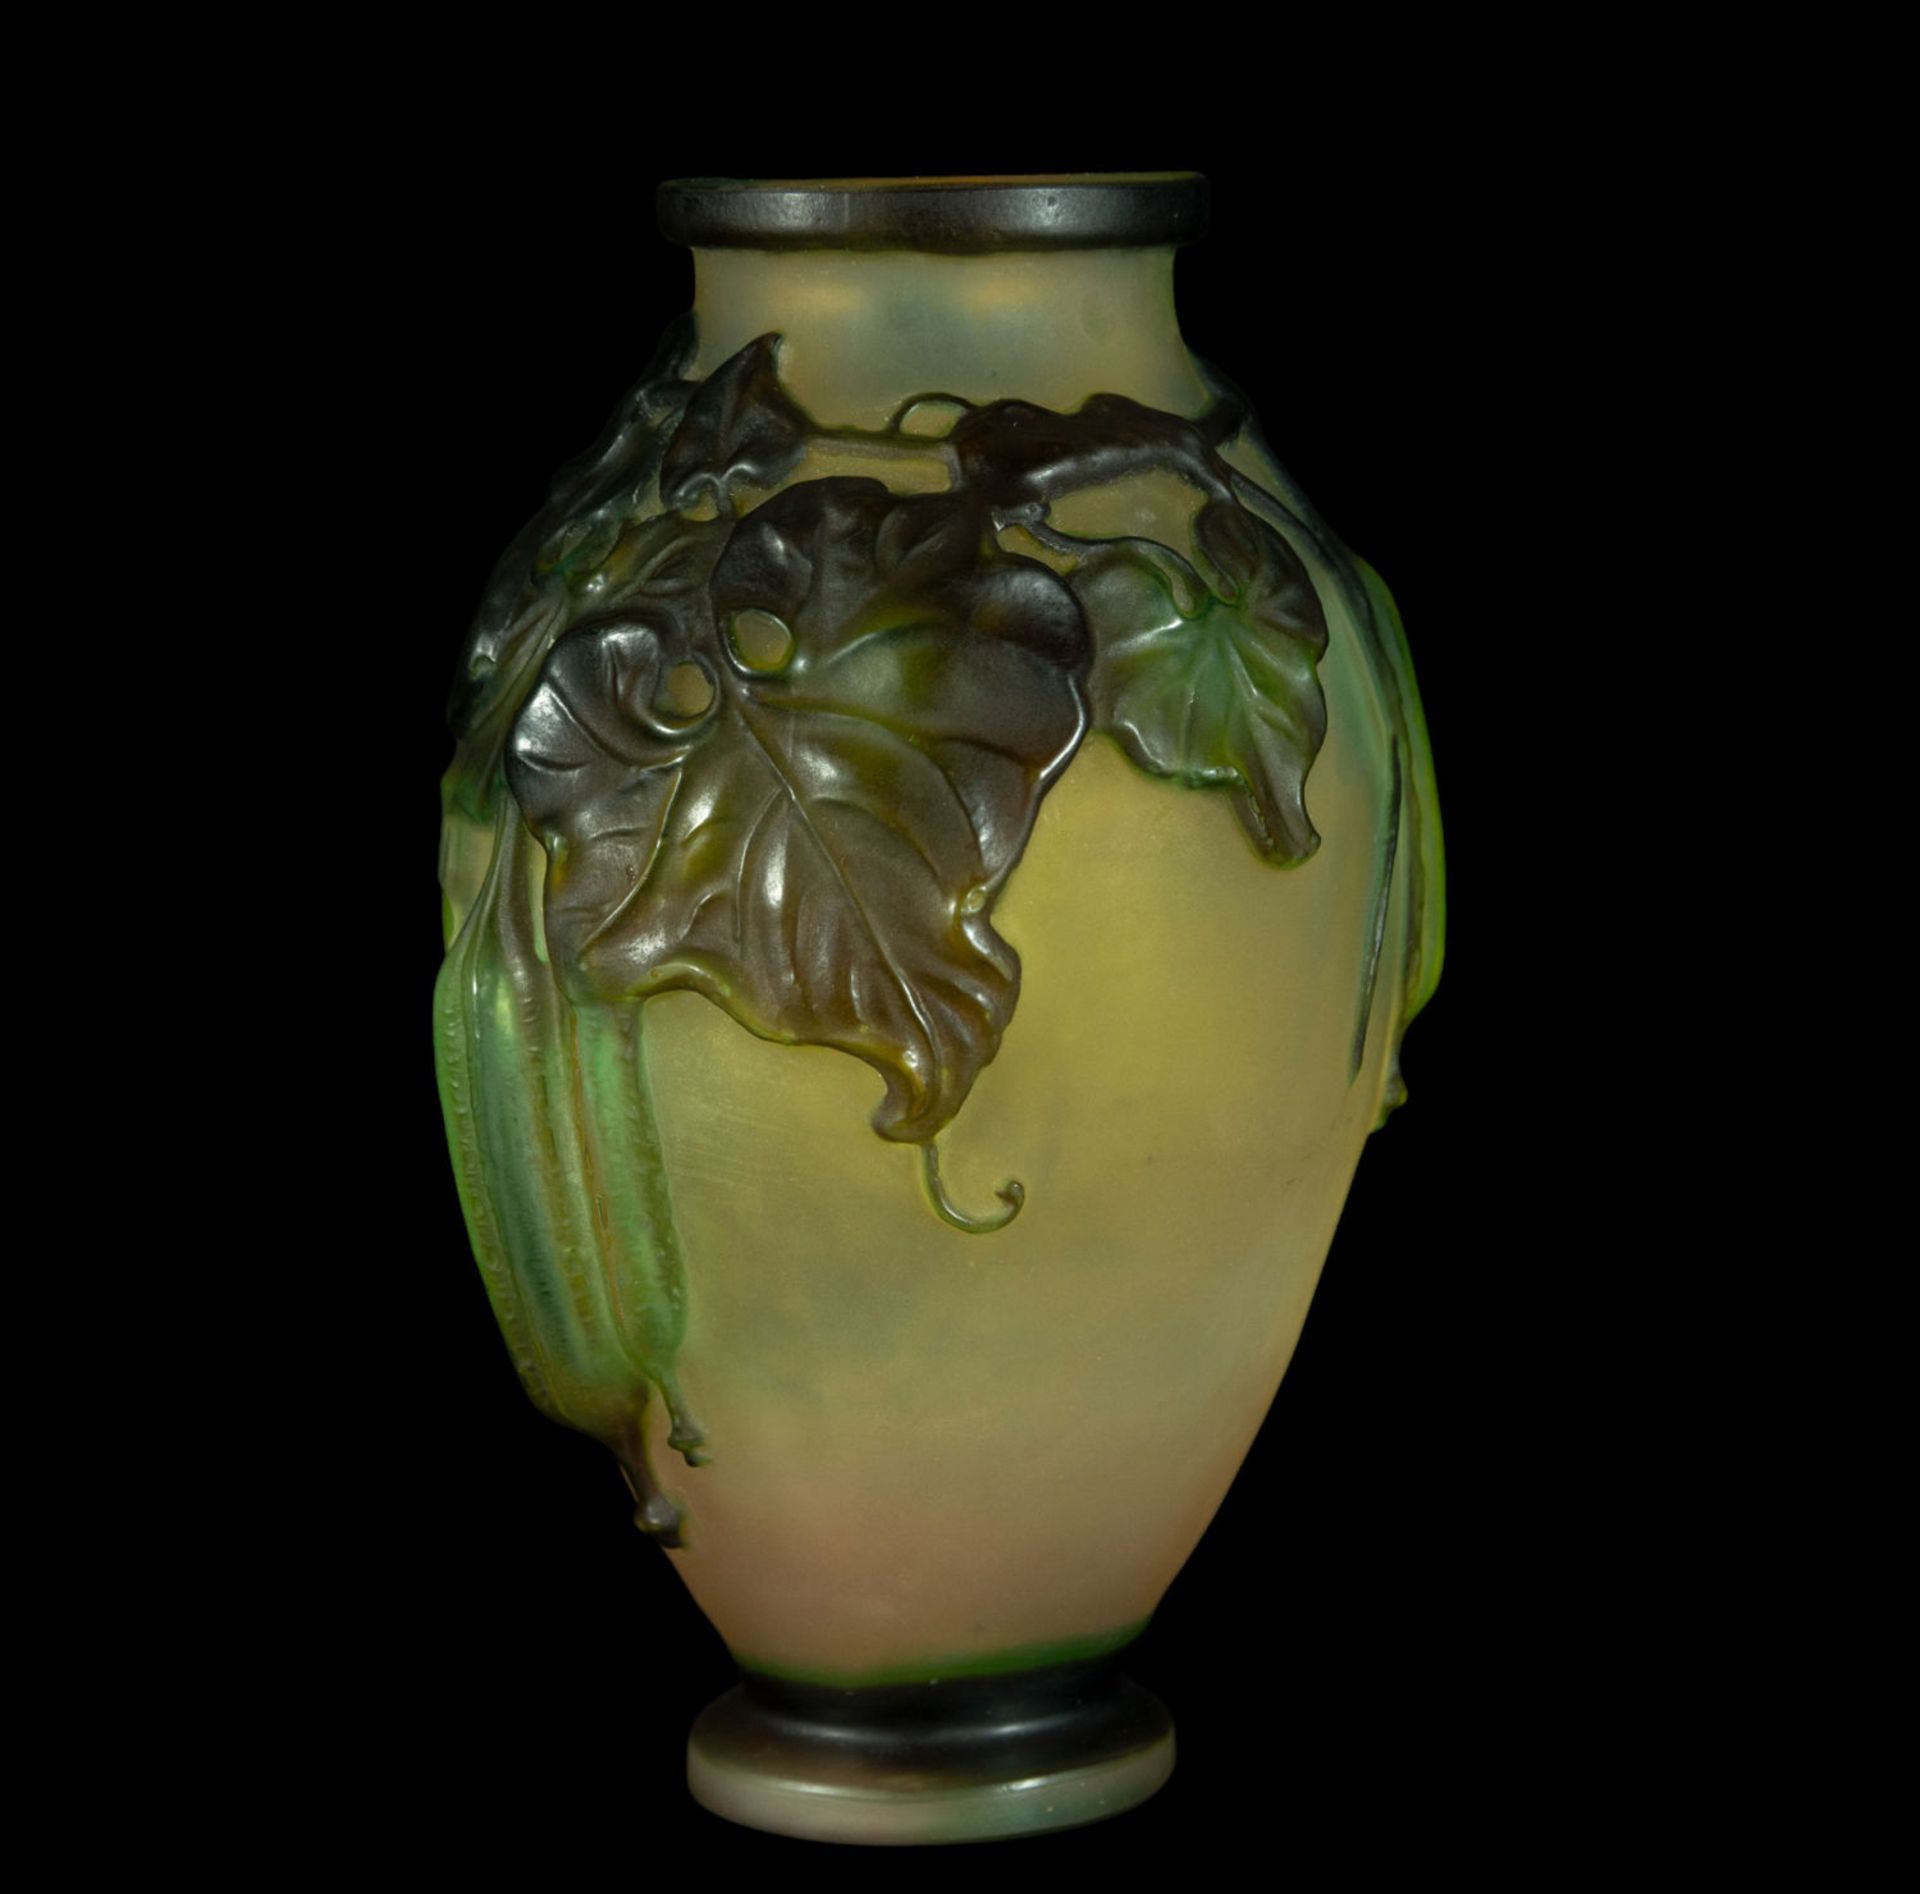 Exquisite Art Nouveau Gallé vase in blown glass and polychrome vitreous paste, 1900s - 1920s - Image 2 of 5